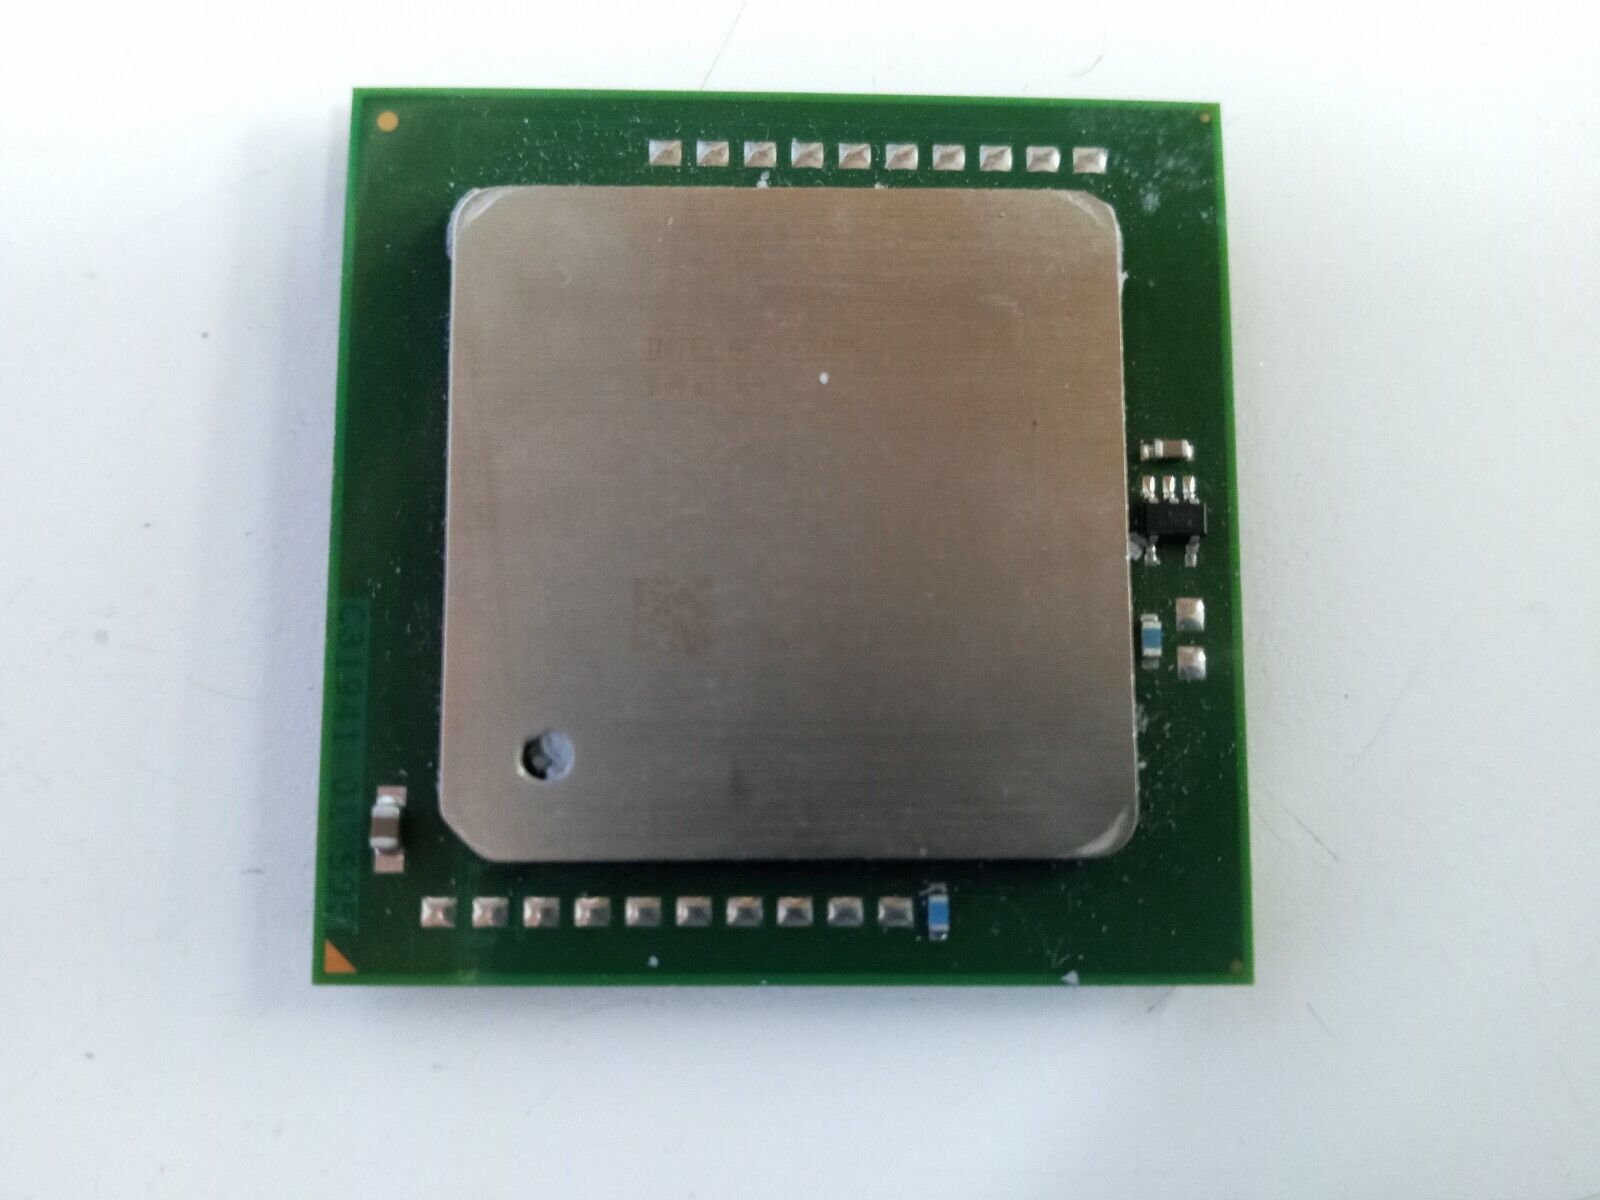 Intel Xeon SL7PH 3600DP 3.6GHz/1MB/800MHz Socket/Socket 604 CPU Processor Server